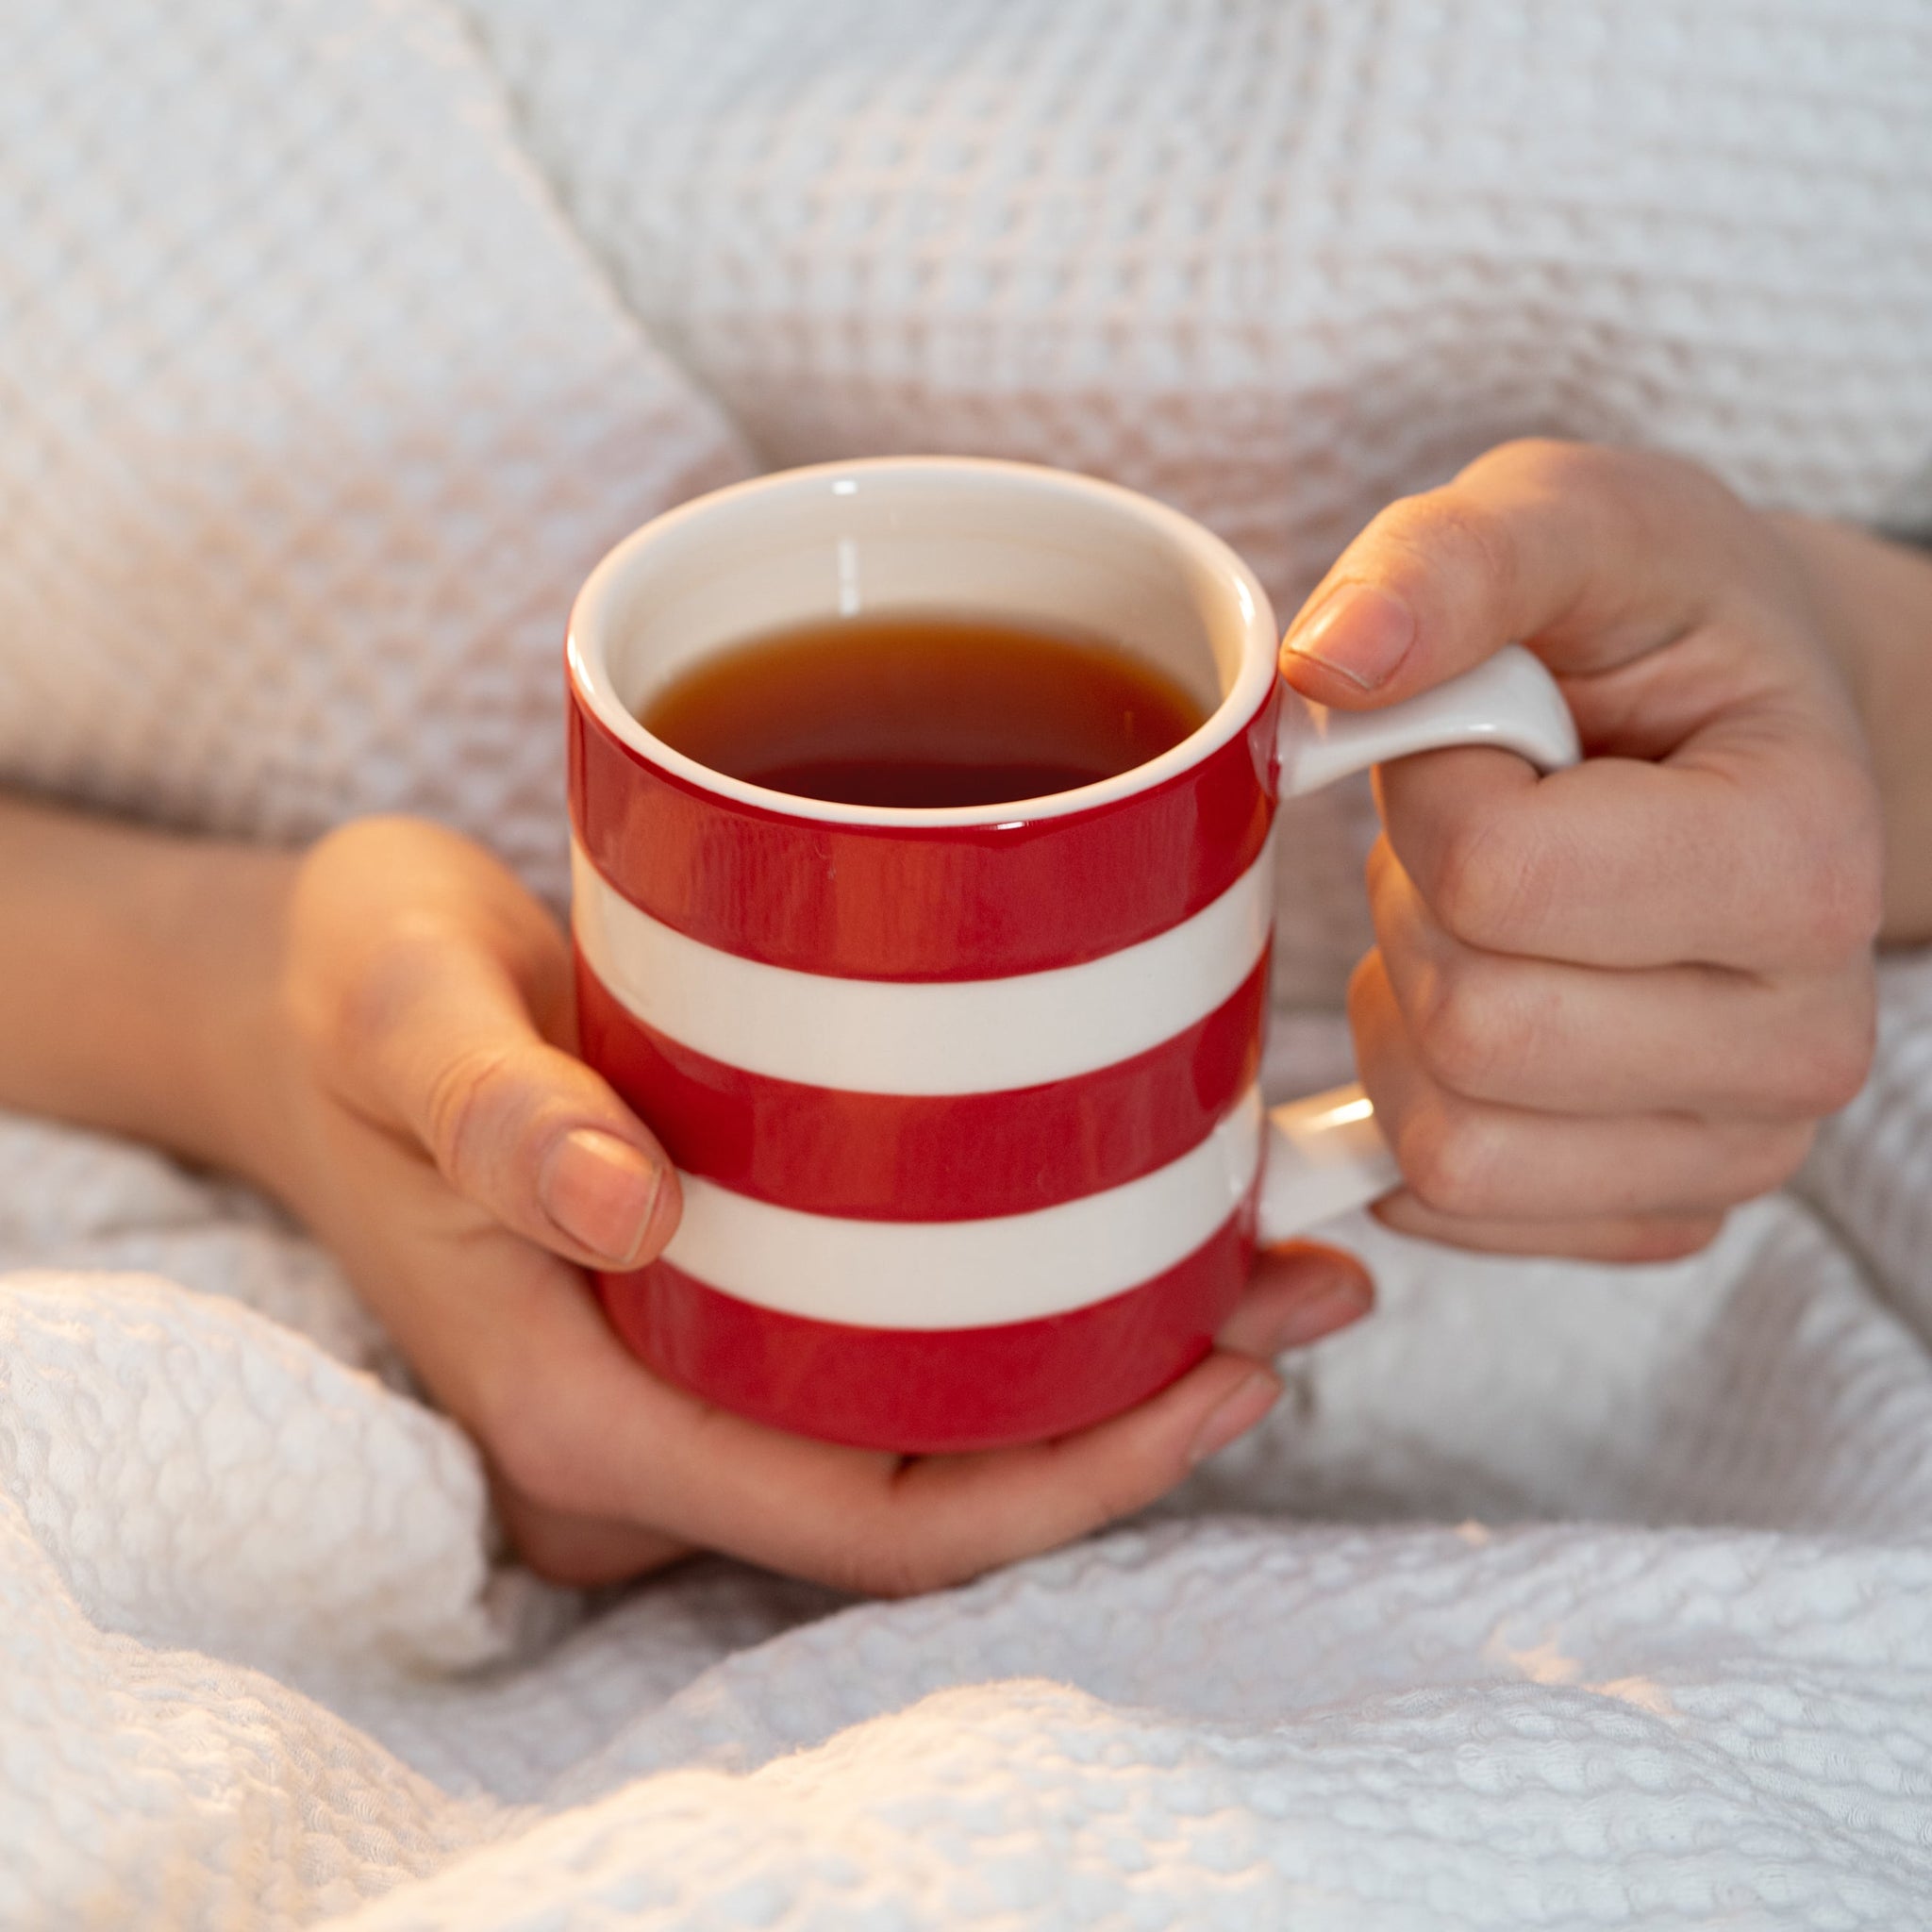 Cup of tea in bed